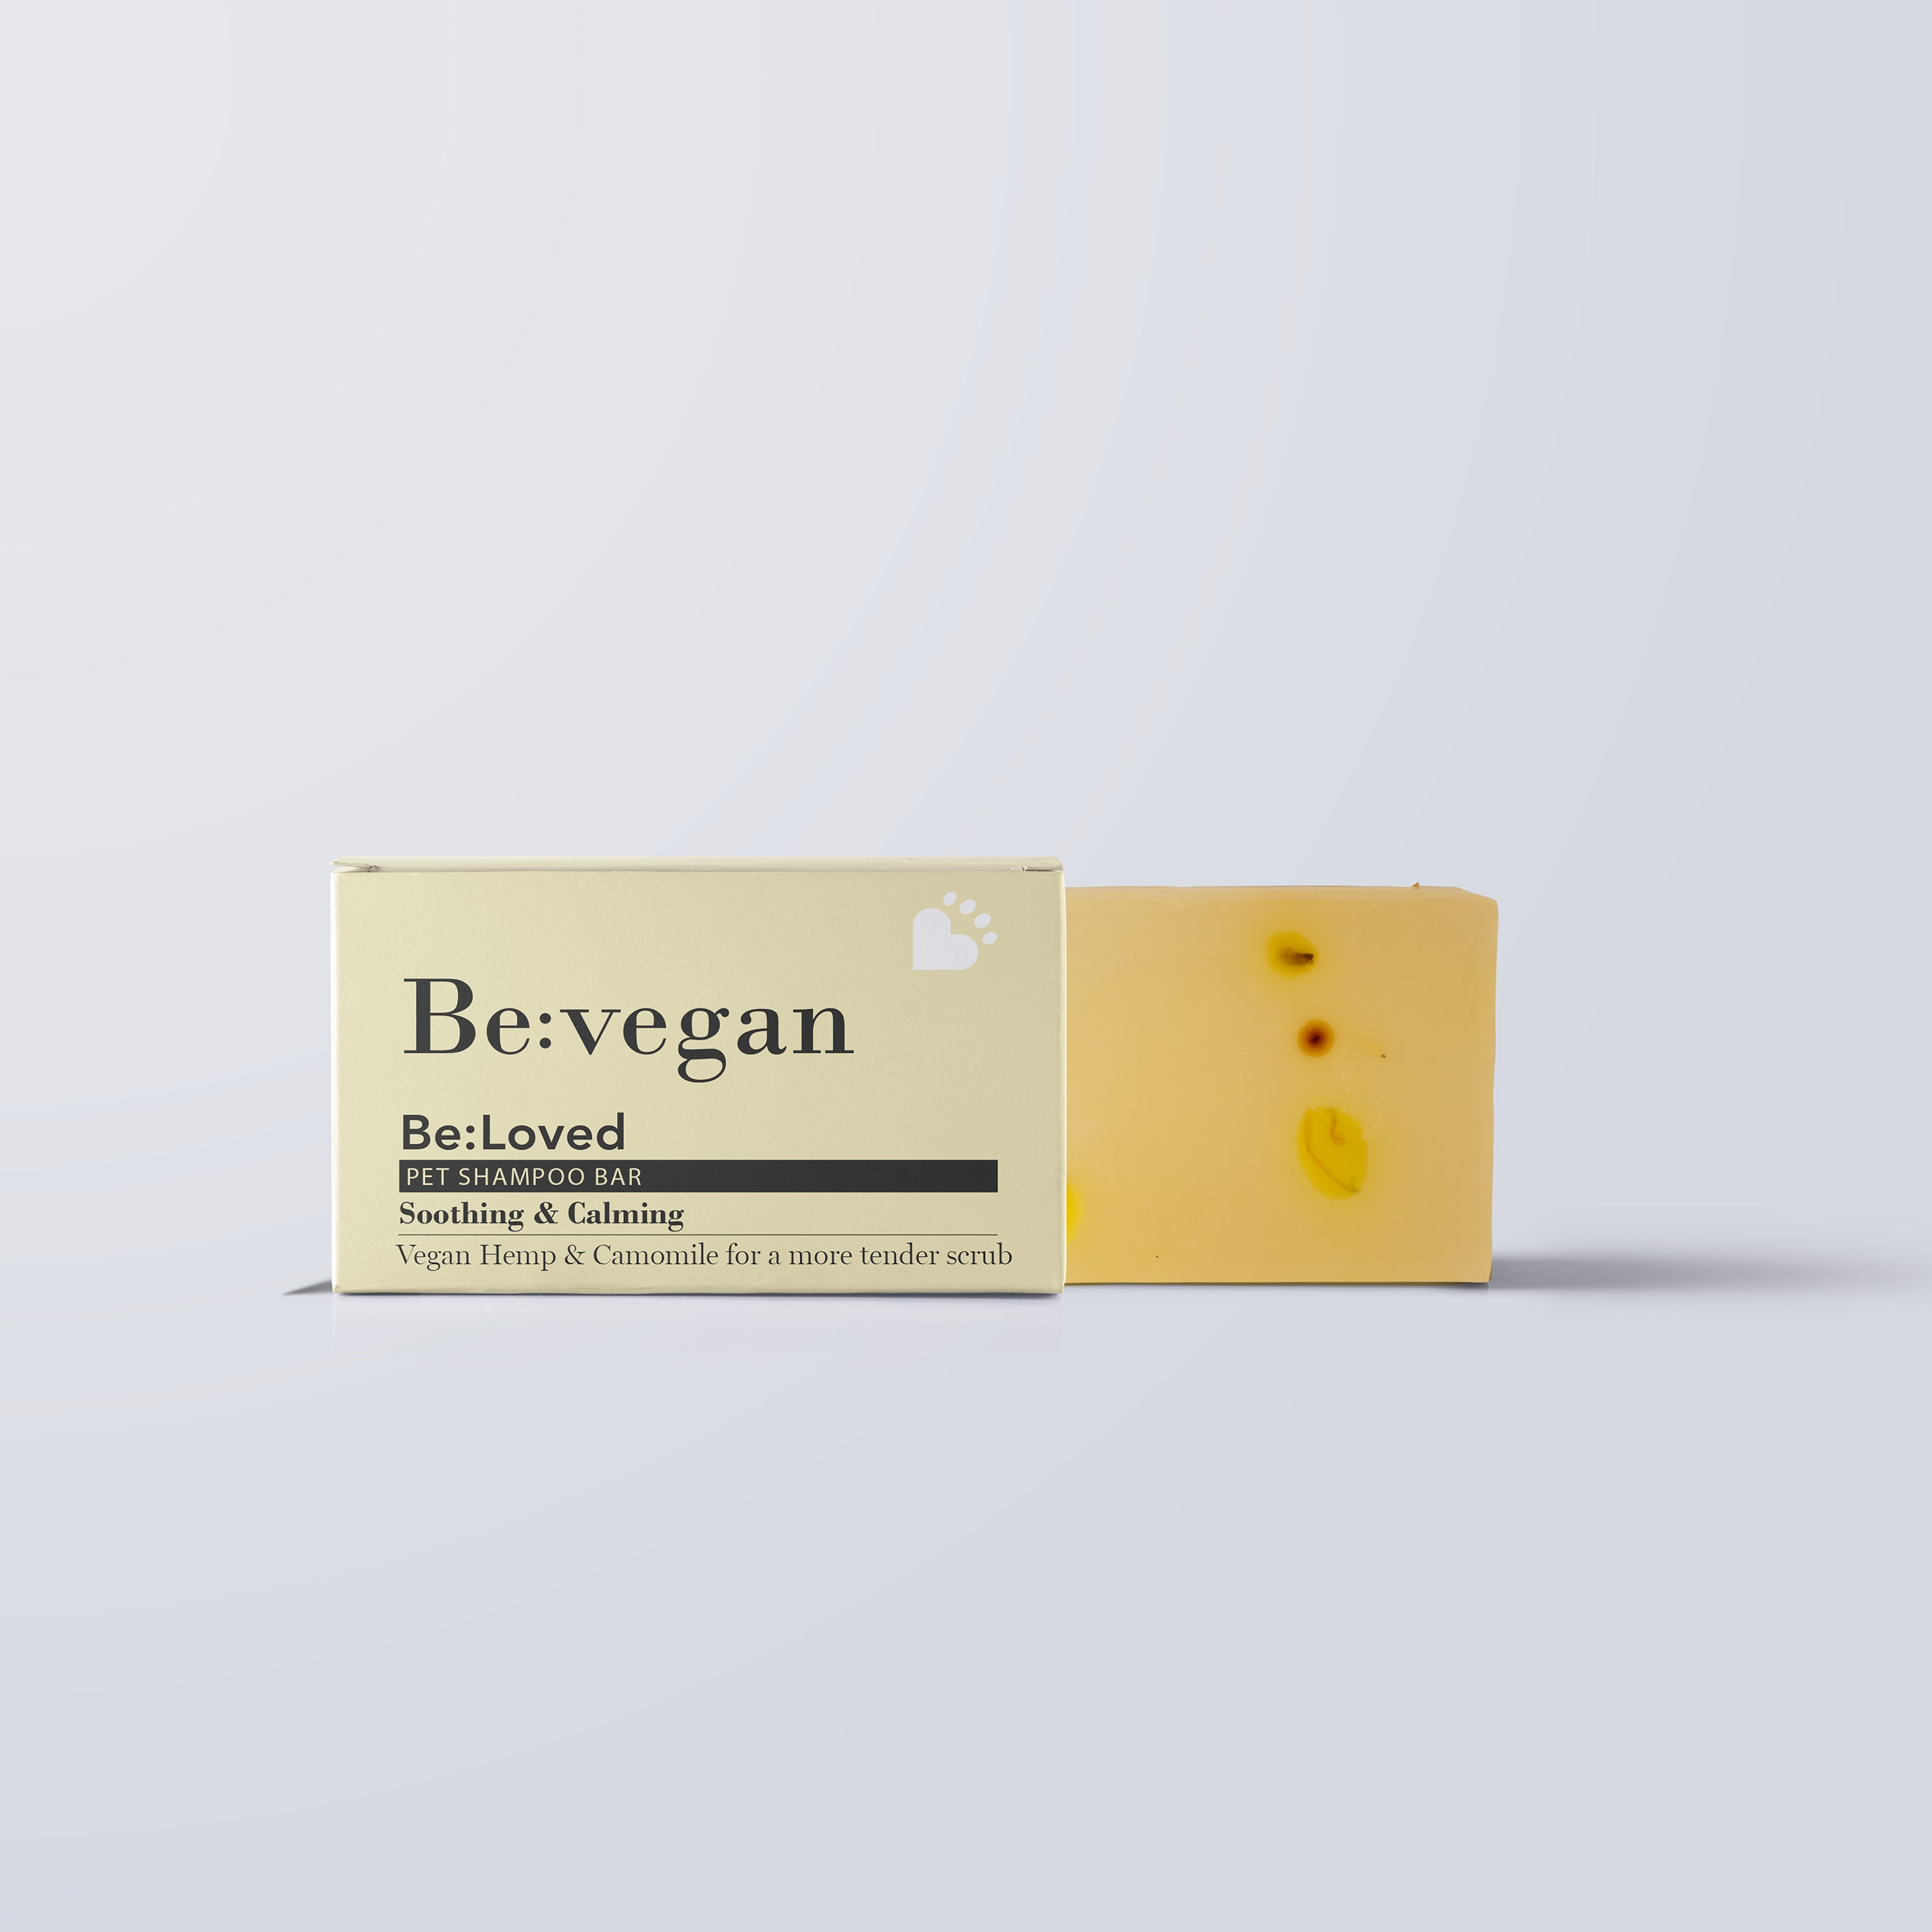 Be:vegan pet shampoo bar product and packaging.